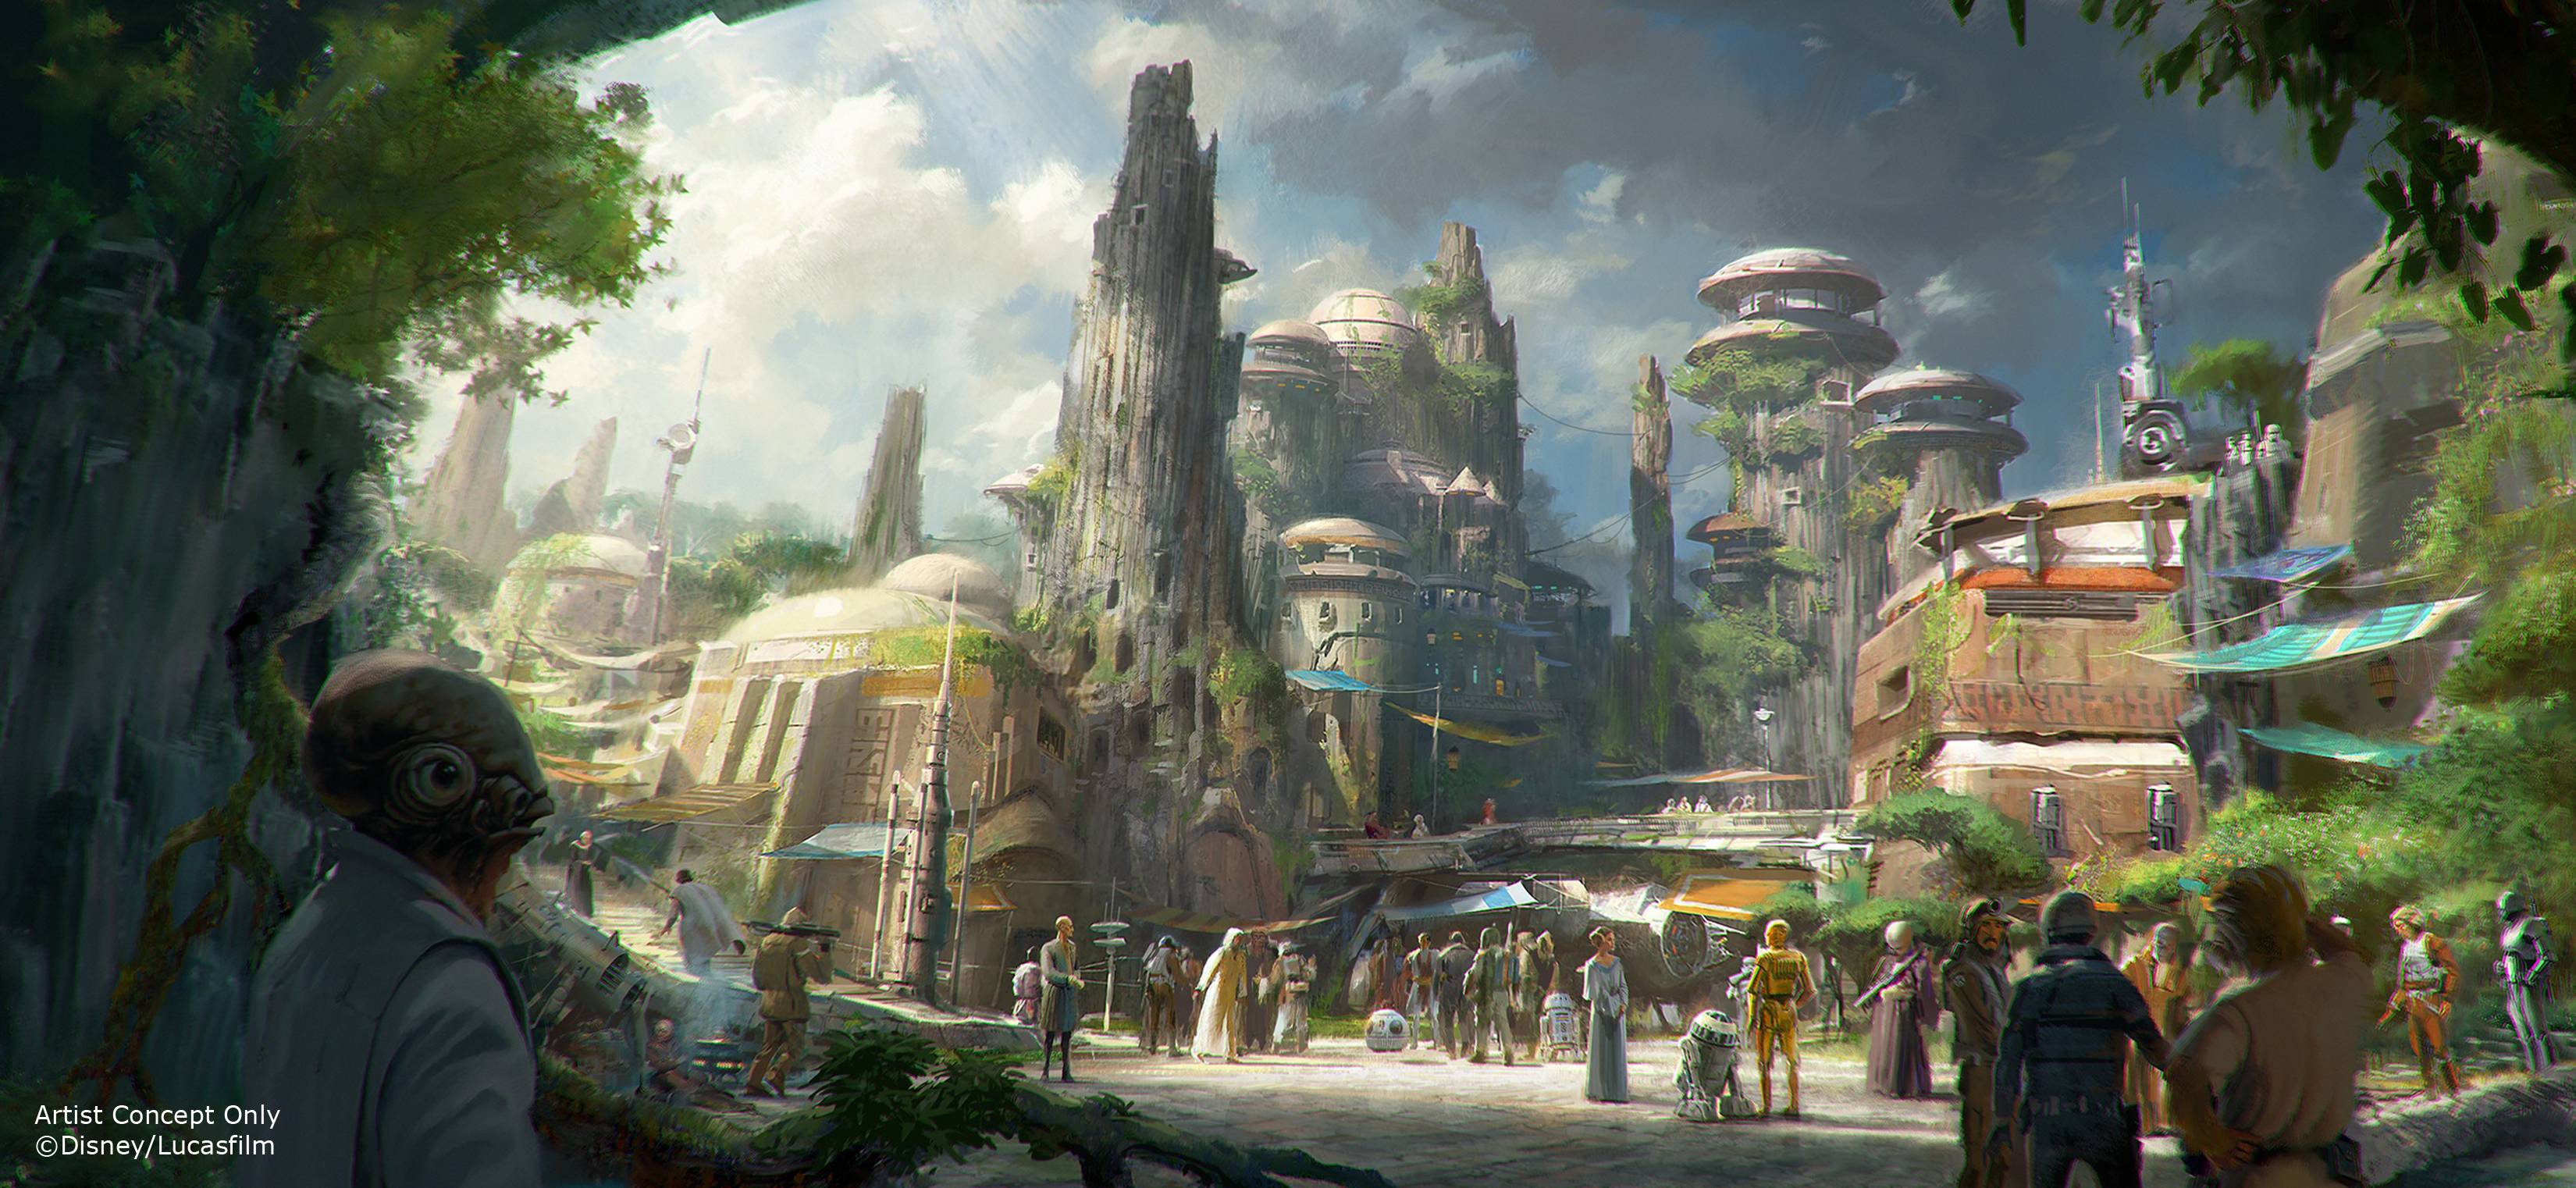 Star Wars themed land announced for Disney's Hollywood Studios